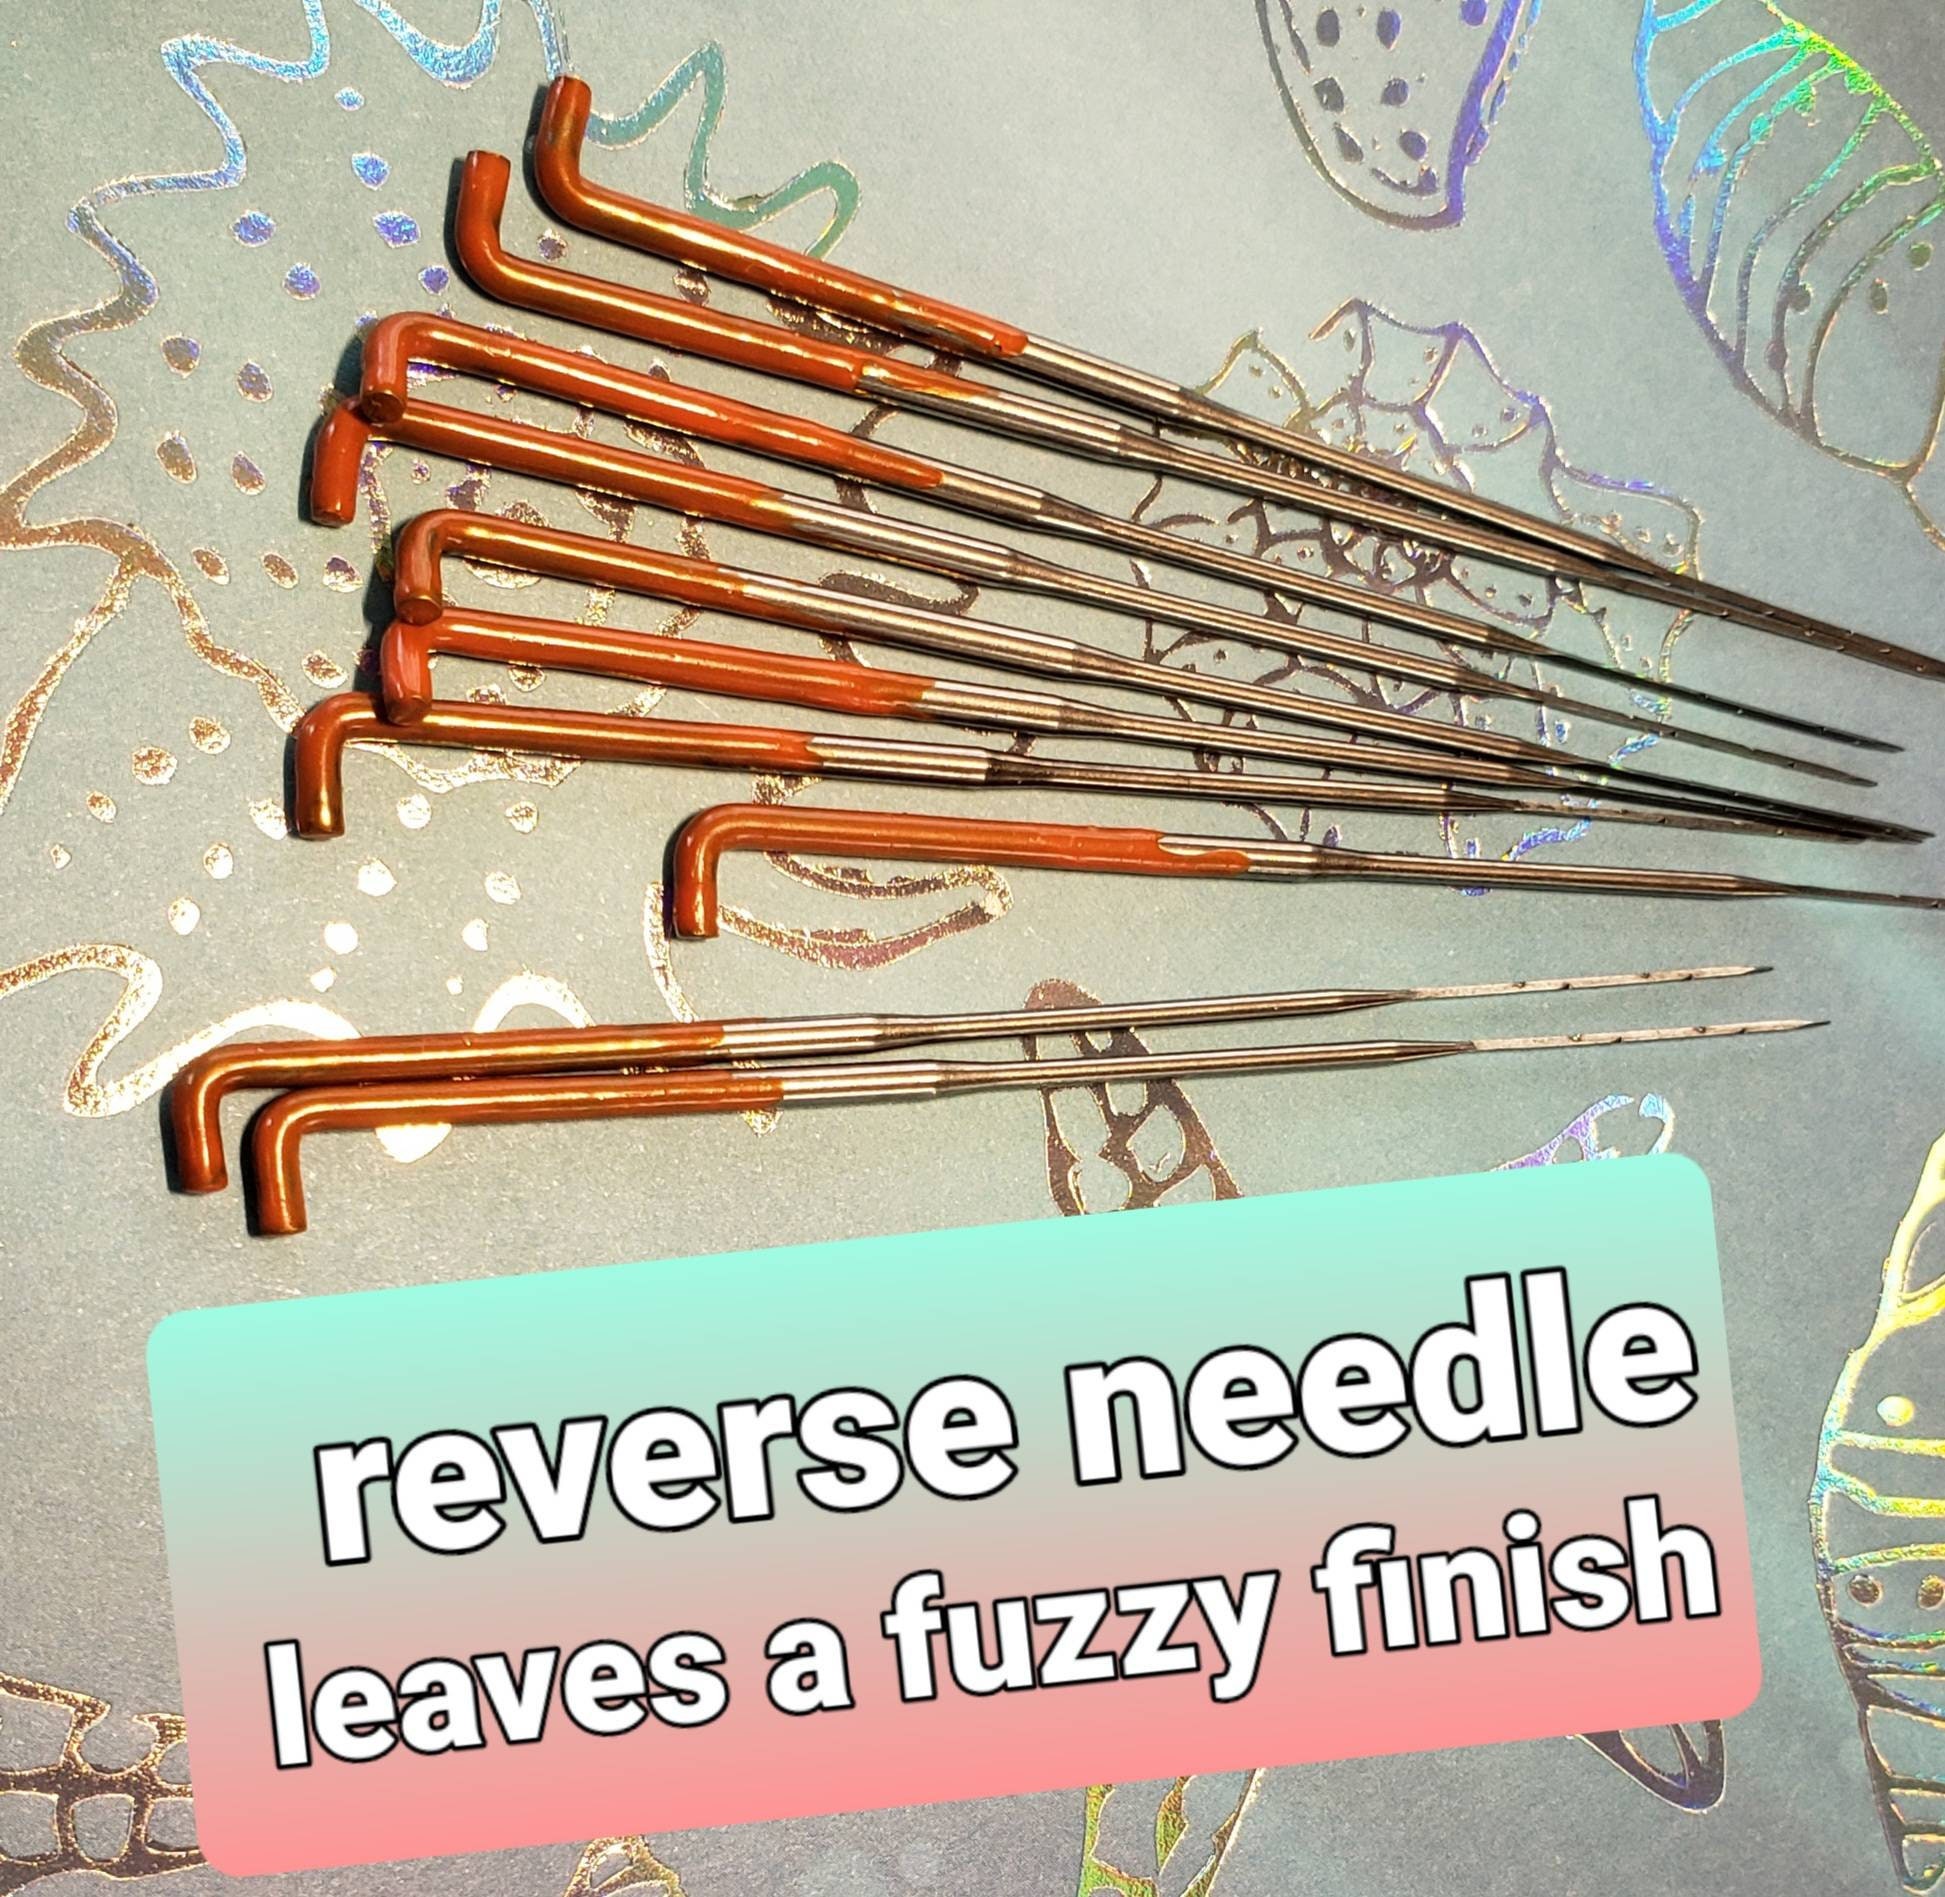 Reversing needle